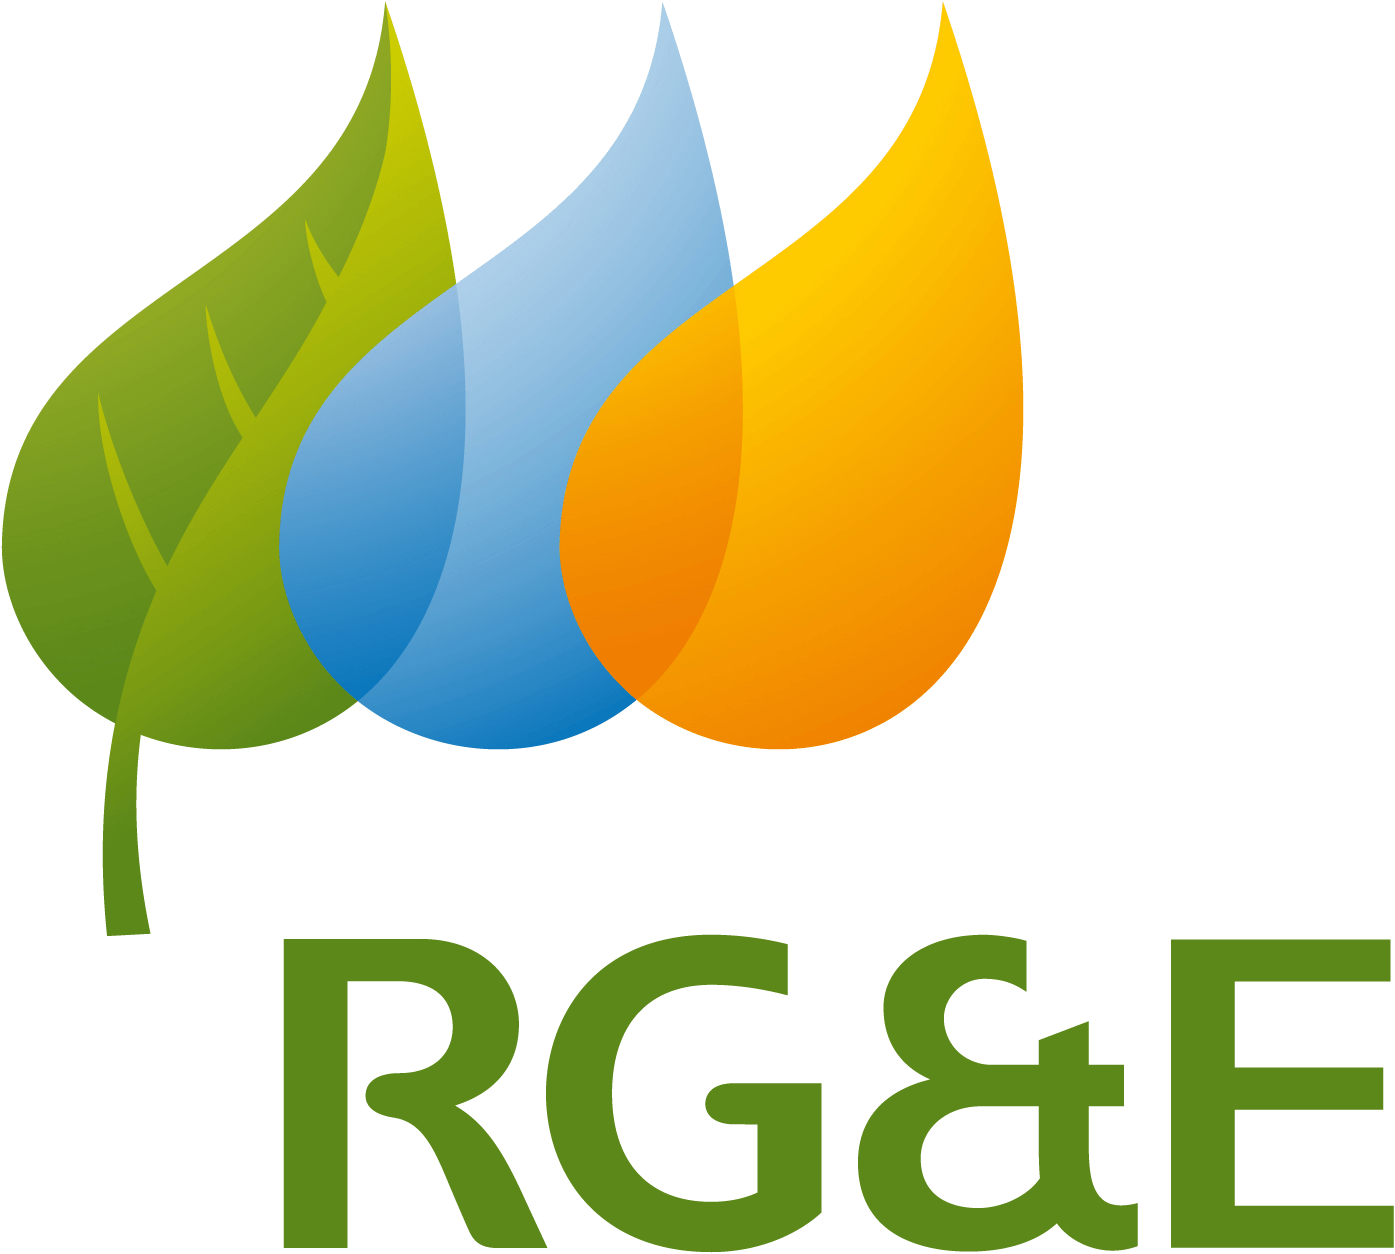 Rg&E Logo - Image - RG&E logo 2010.png | Logopedia | FANDOM powered by Wikia